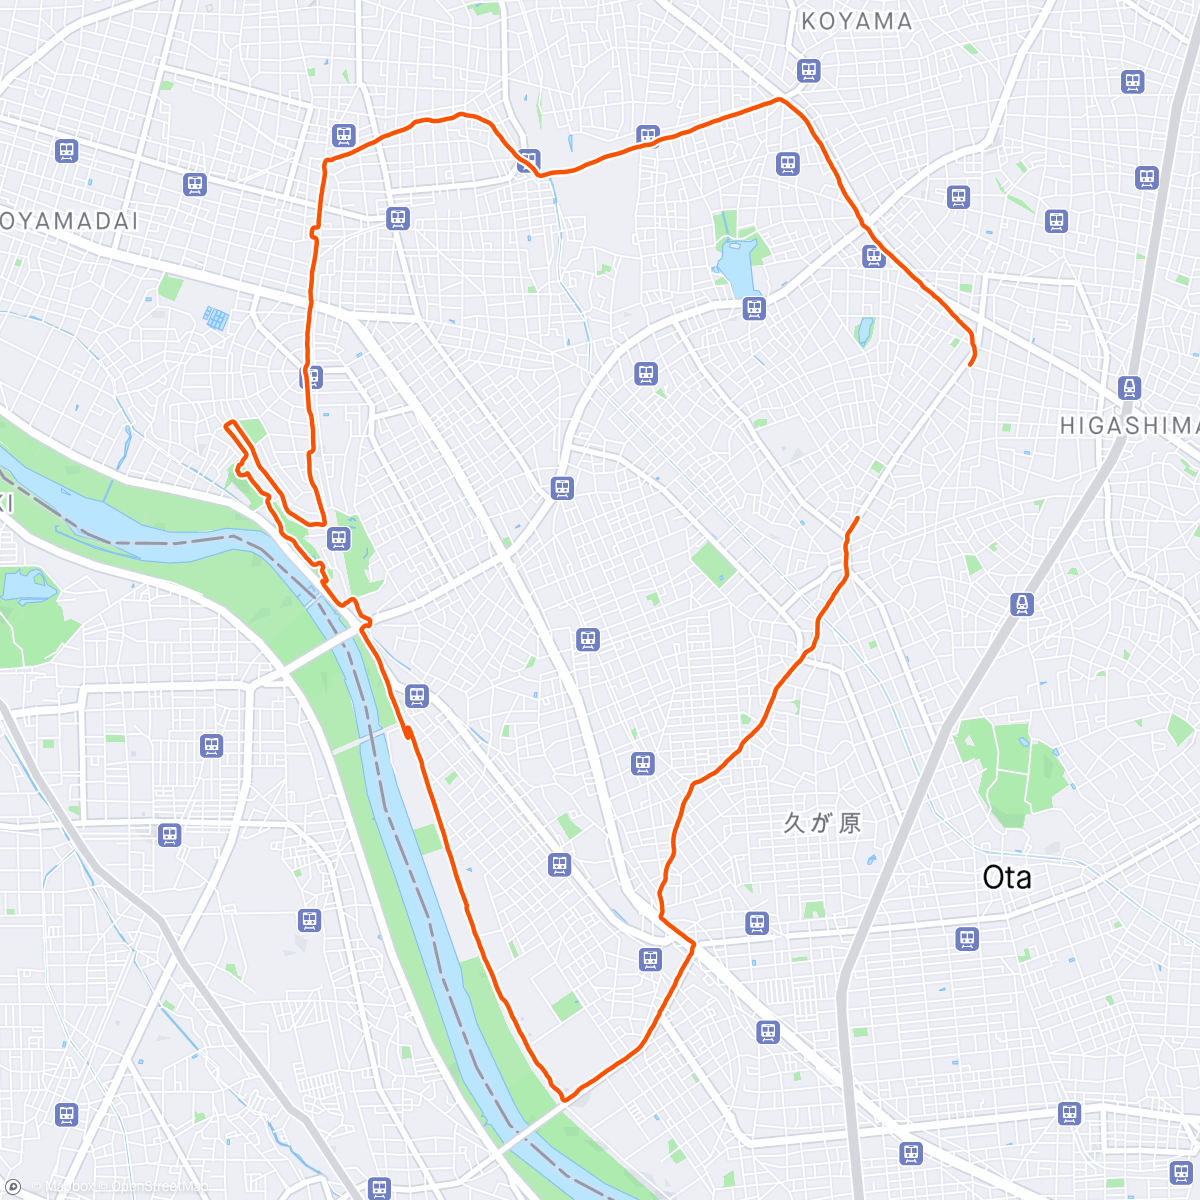 「Cherry Blossom Viewing Run 15km」活動的地圖